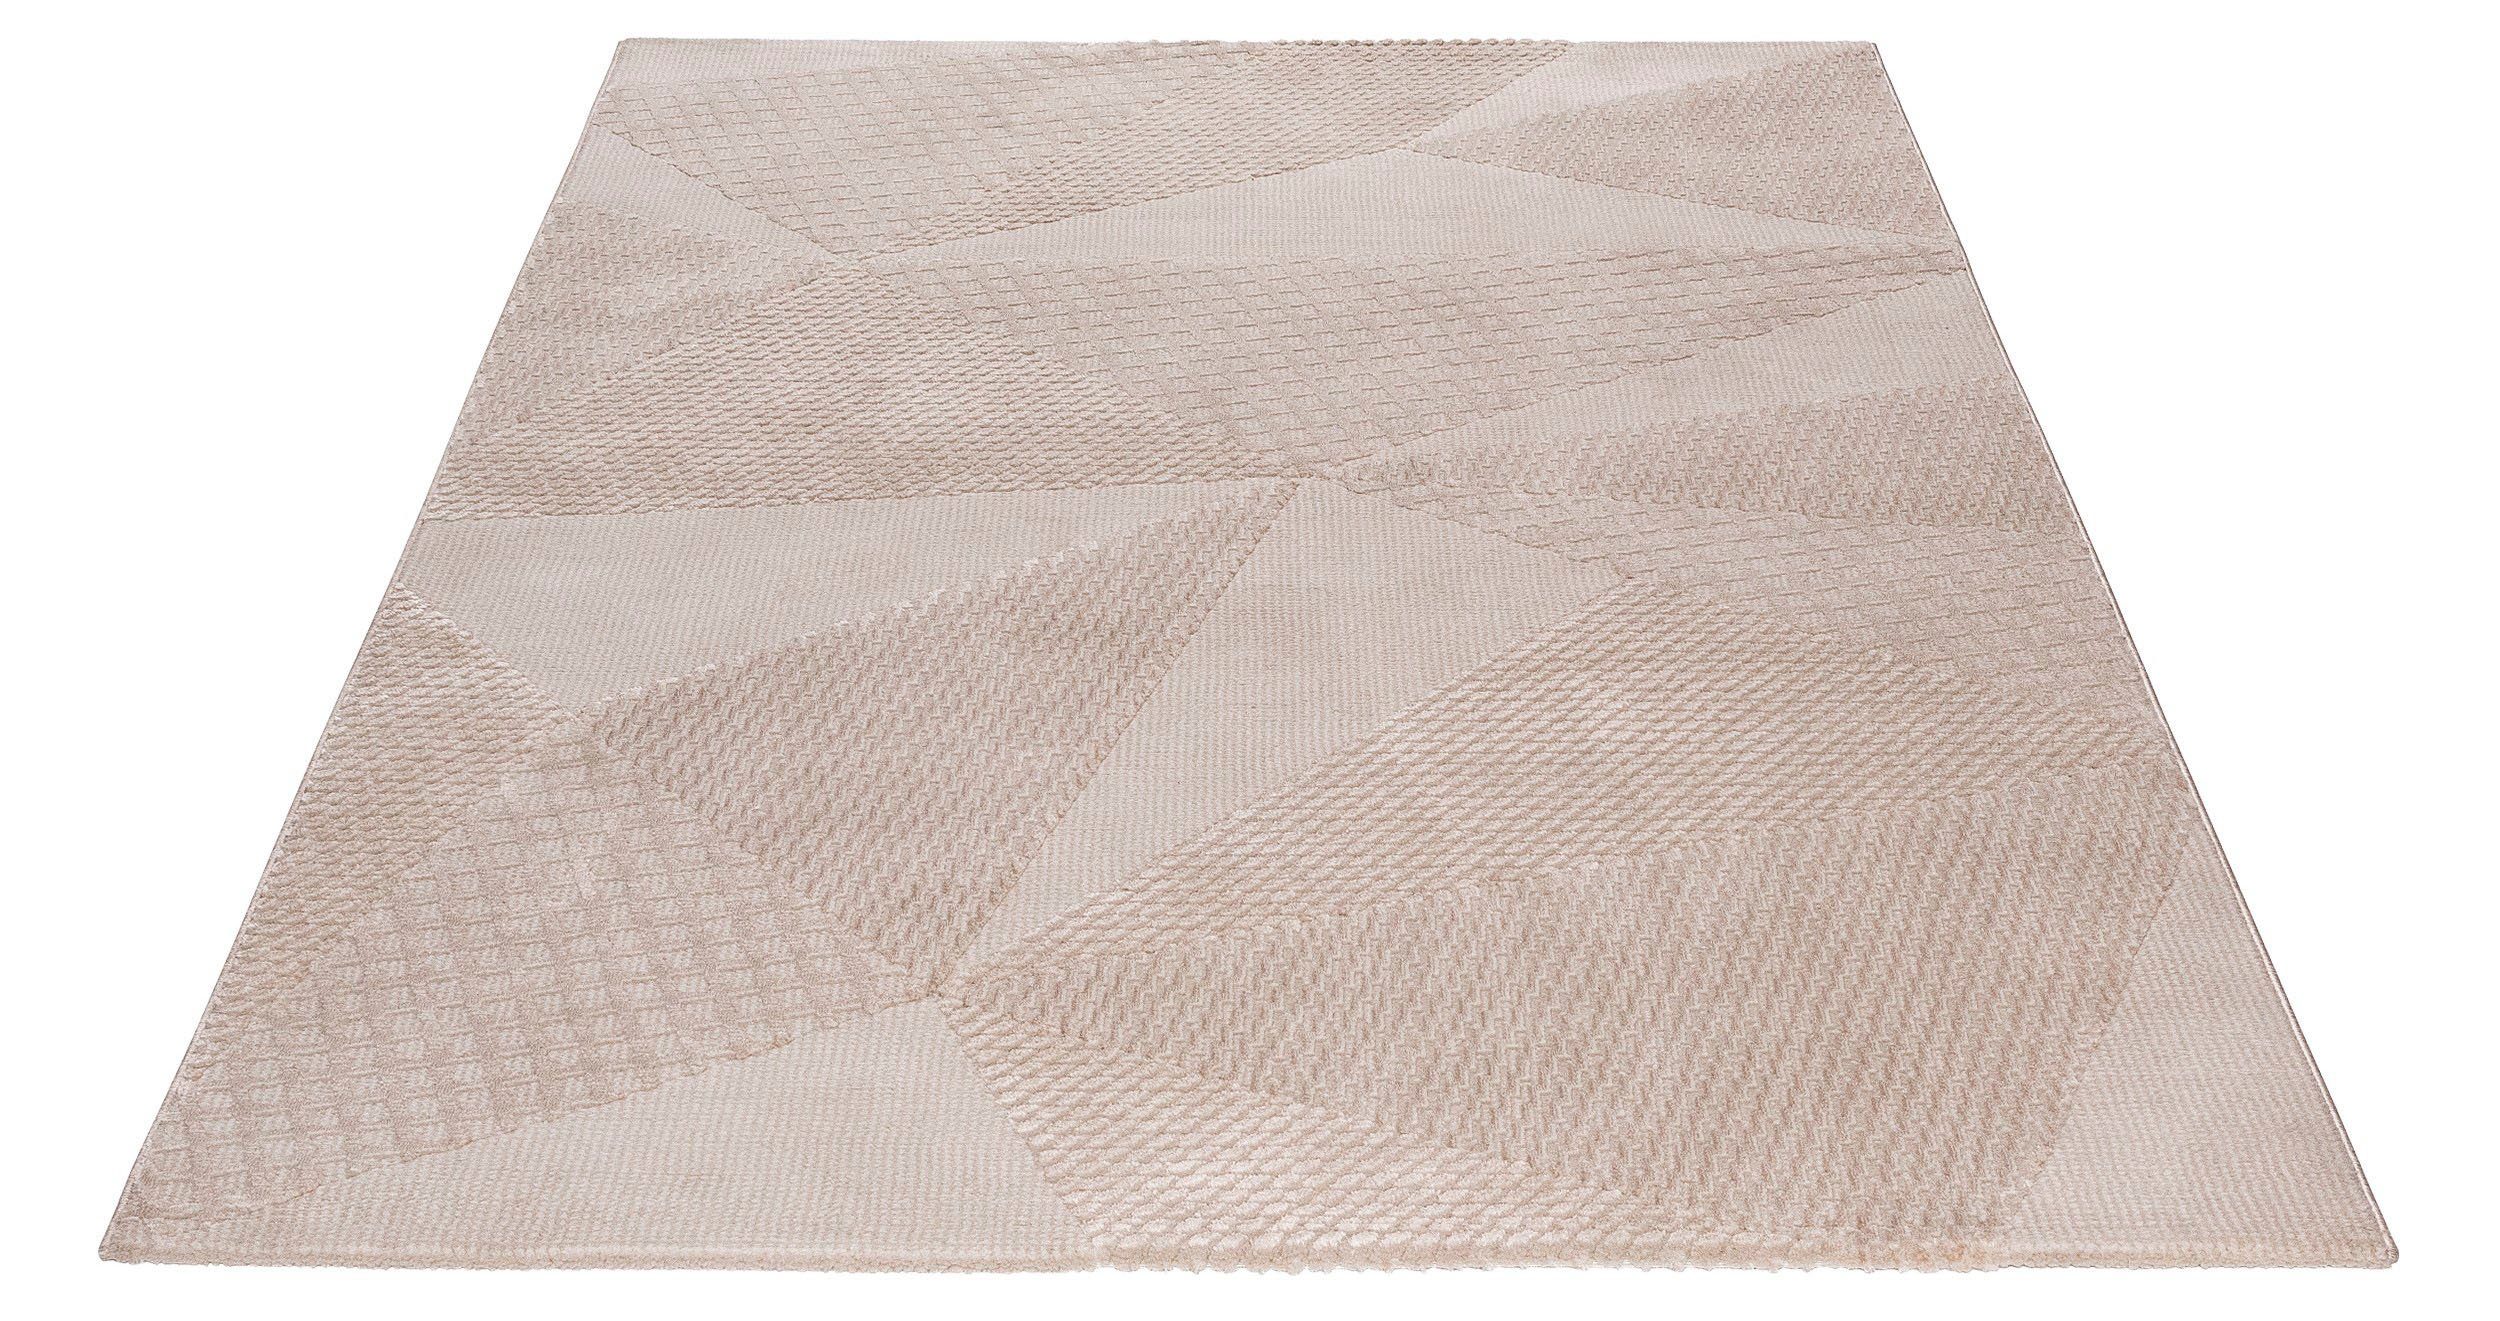 SEHRAZAT Vloerkleed- modern laagpolig vloerkleed, tapijtenloods Luxury , beige geodriehoek patroon, 80x150 cm